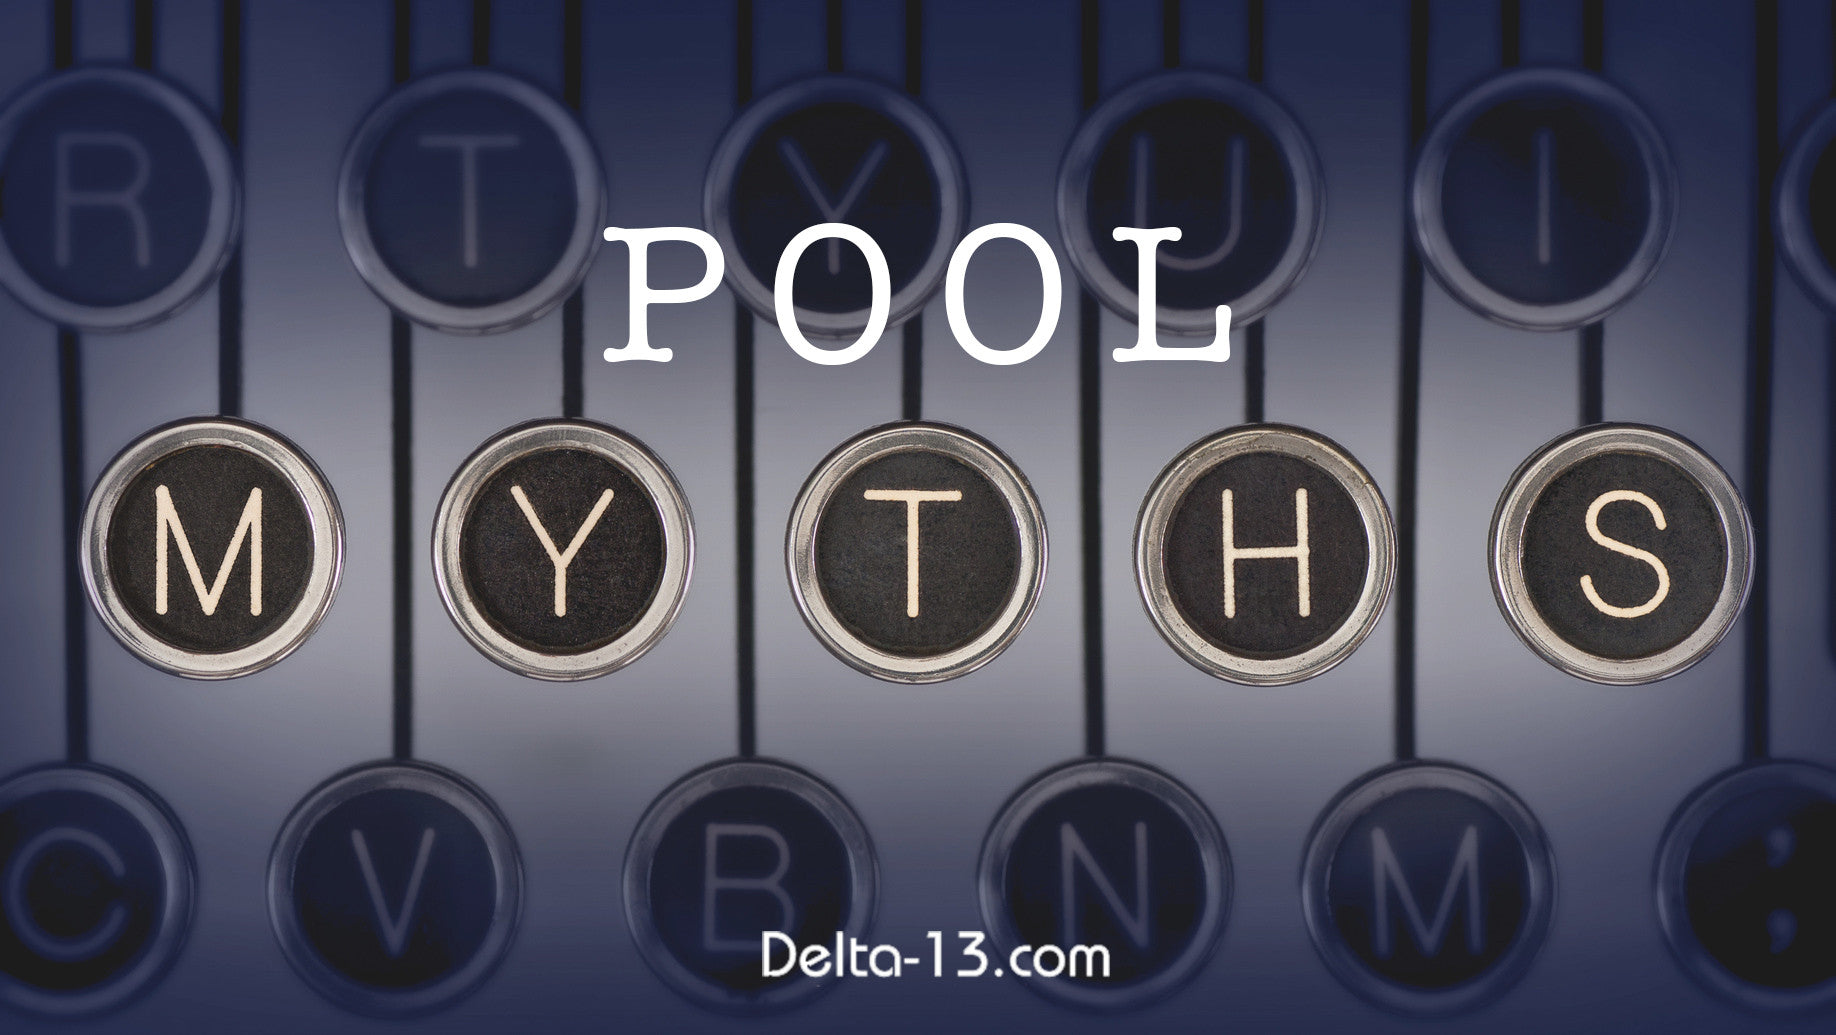 Pool Myths